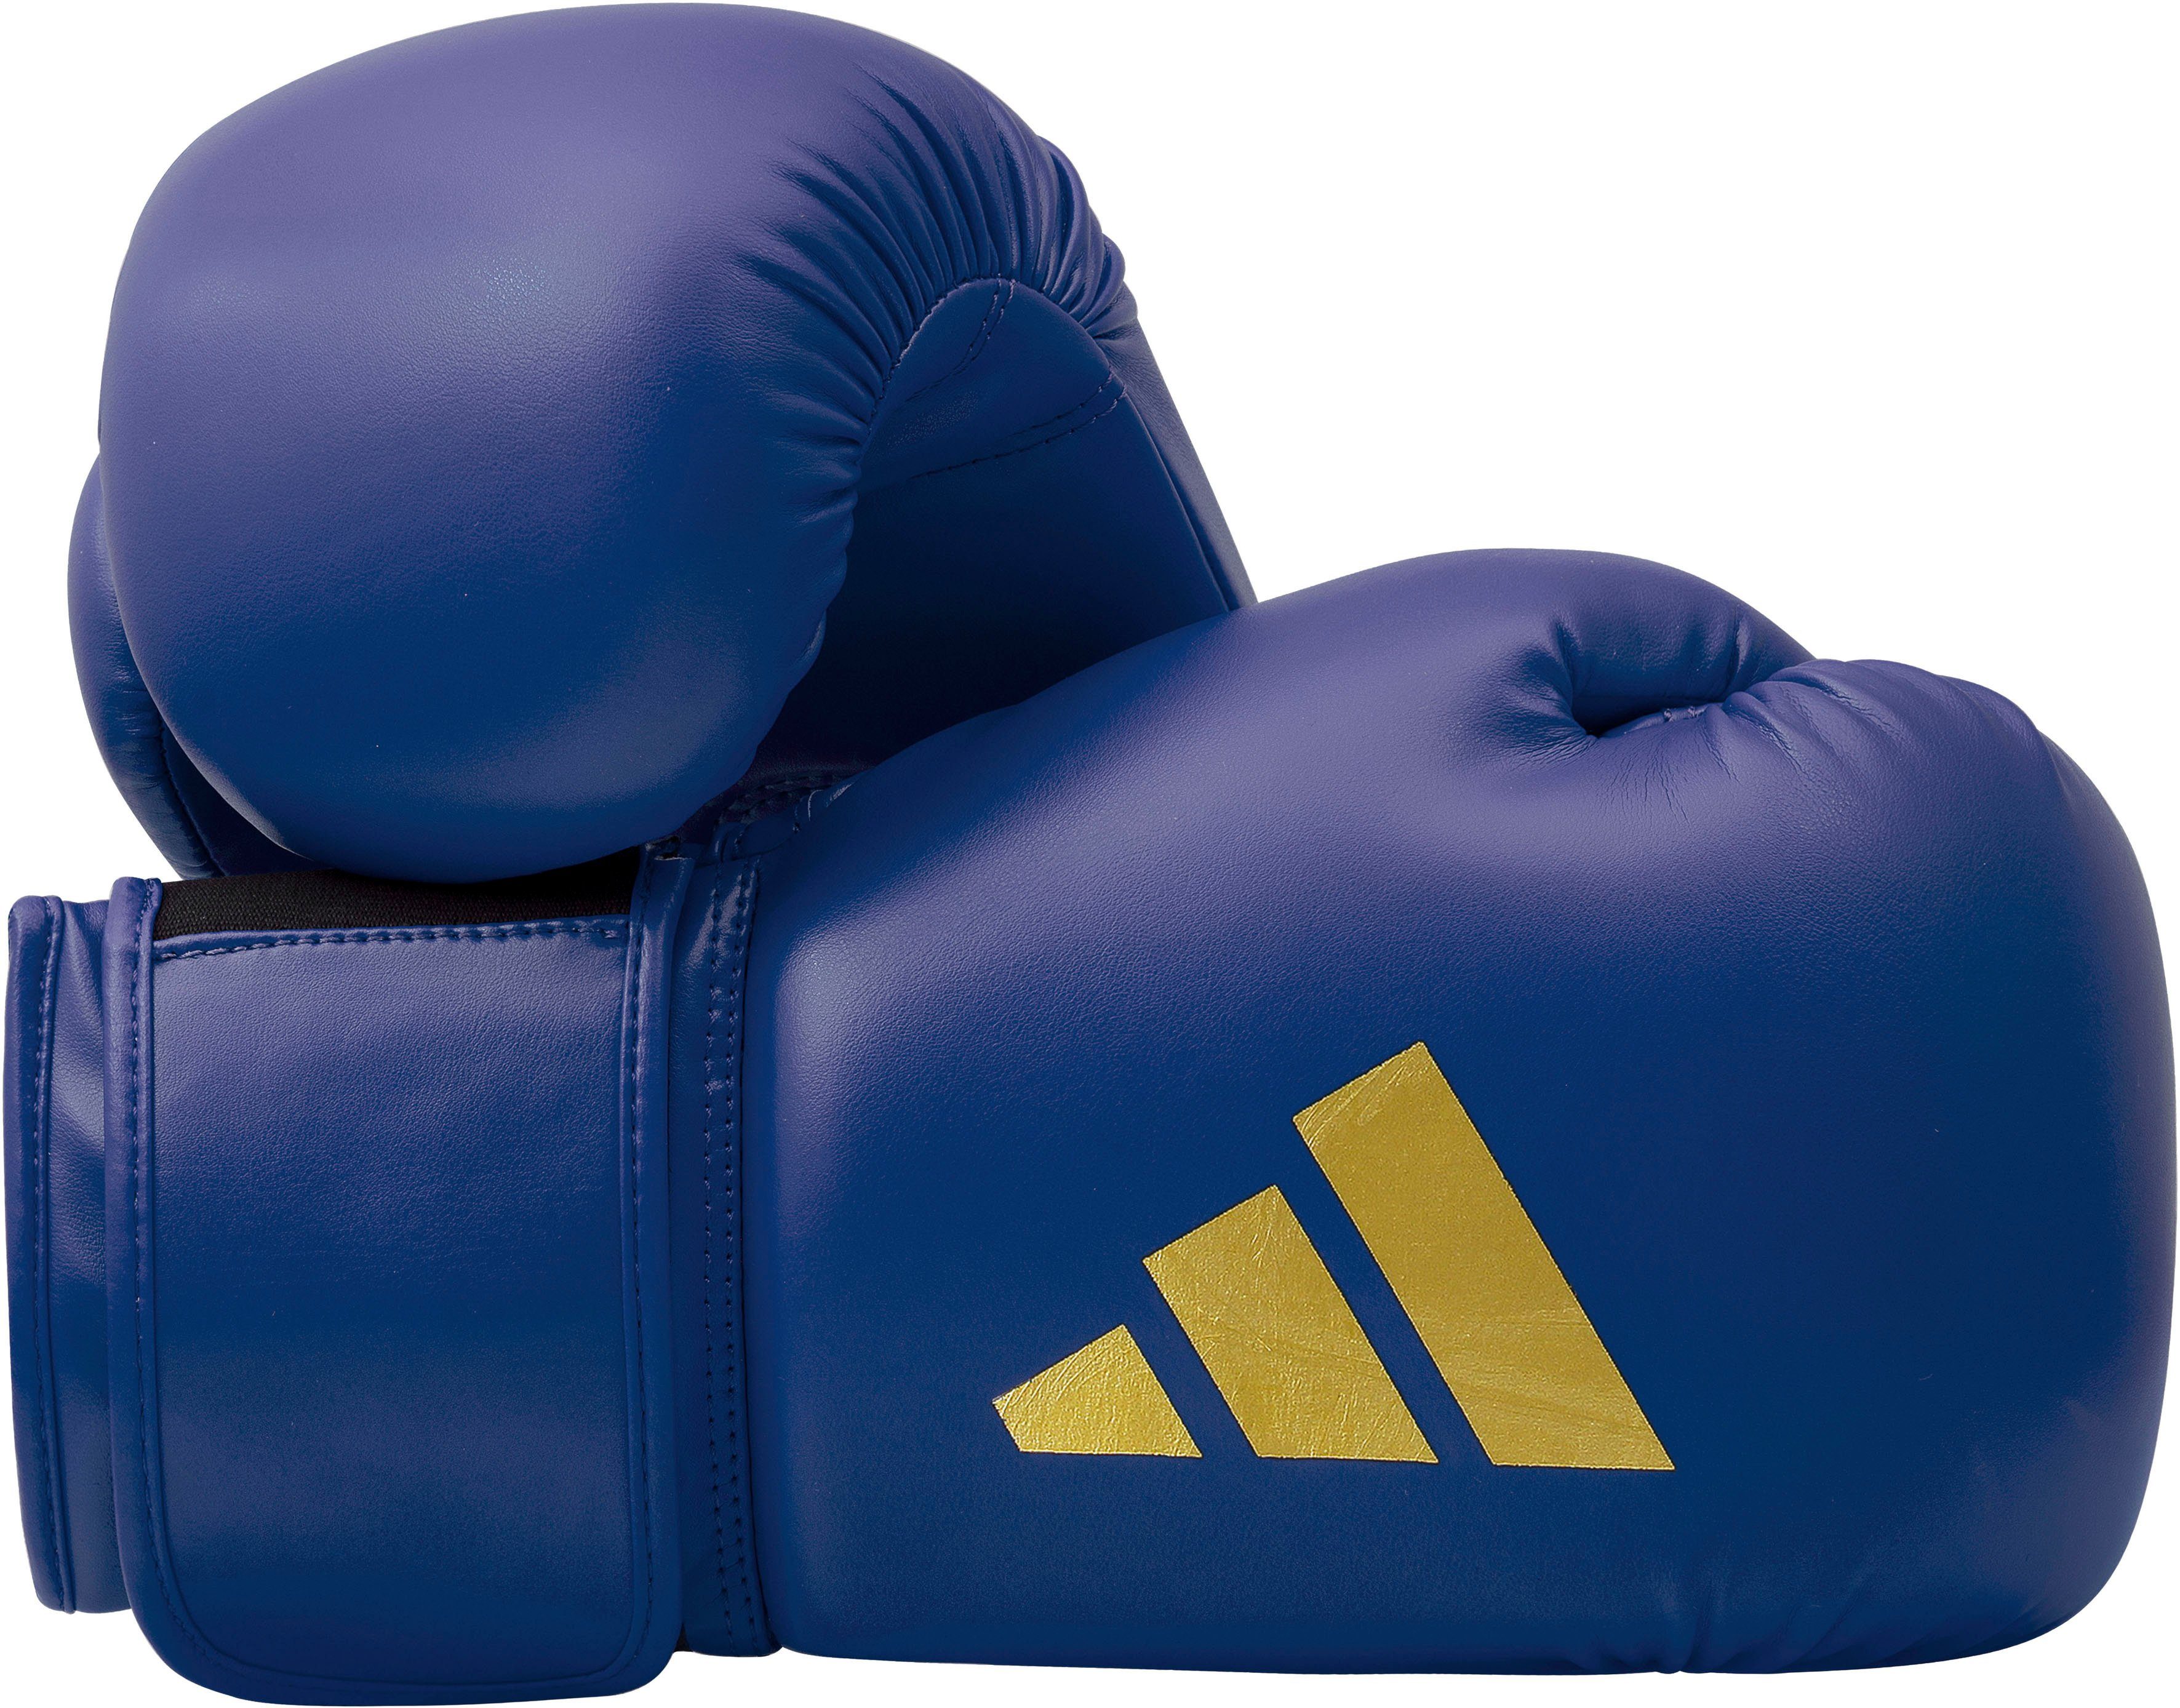 adidas Performance Boxhandschuhe Speed blau/goldfarben 50